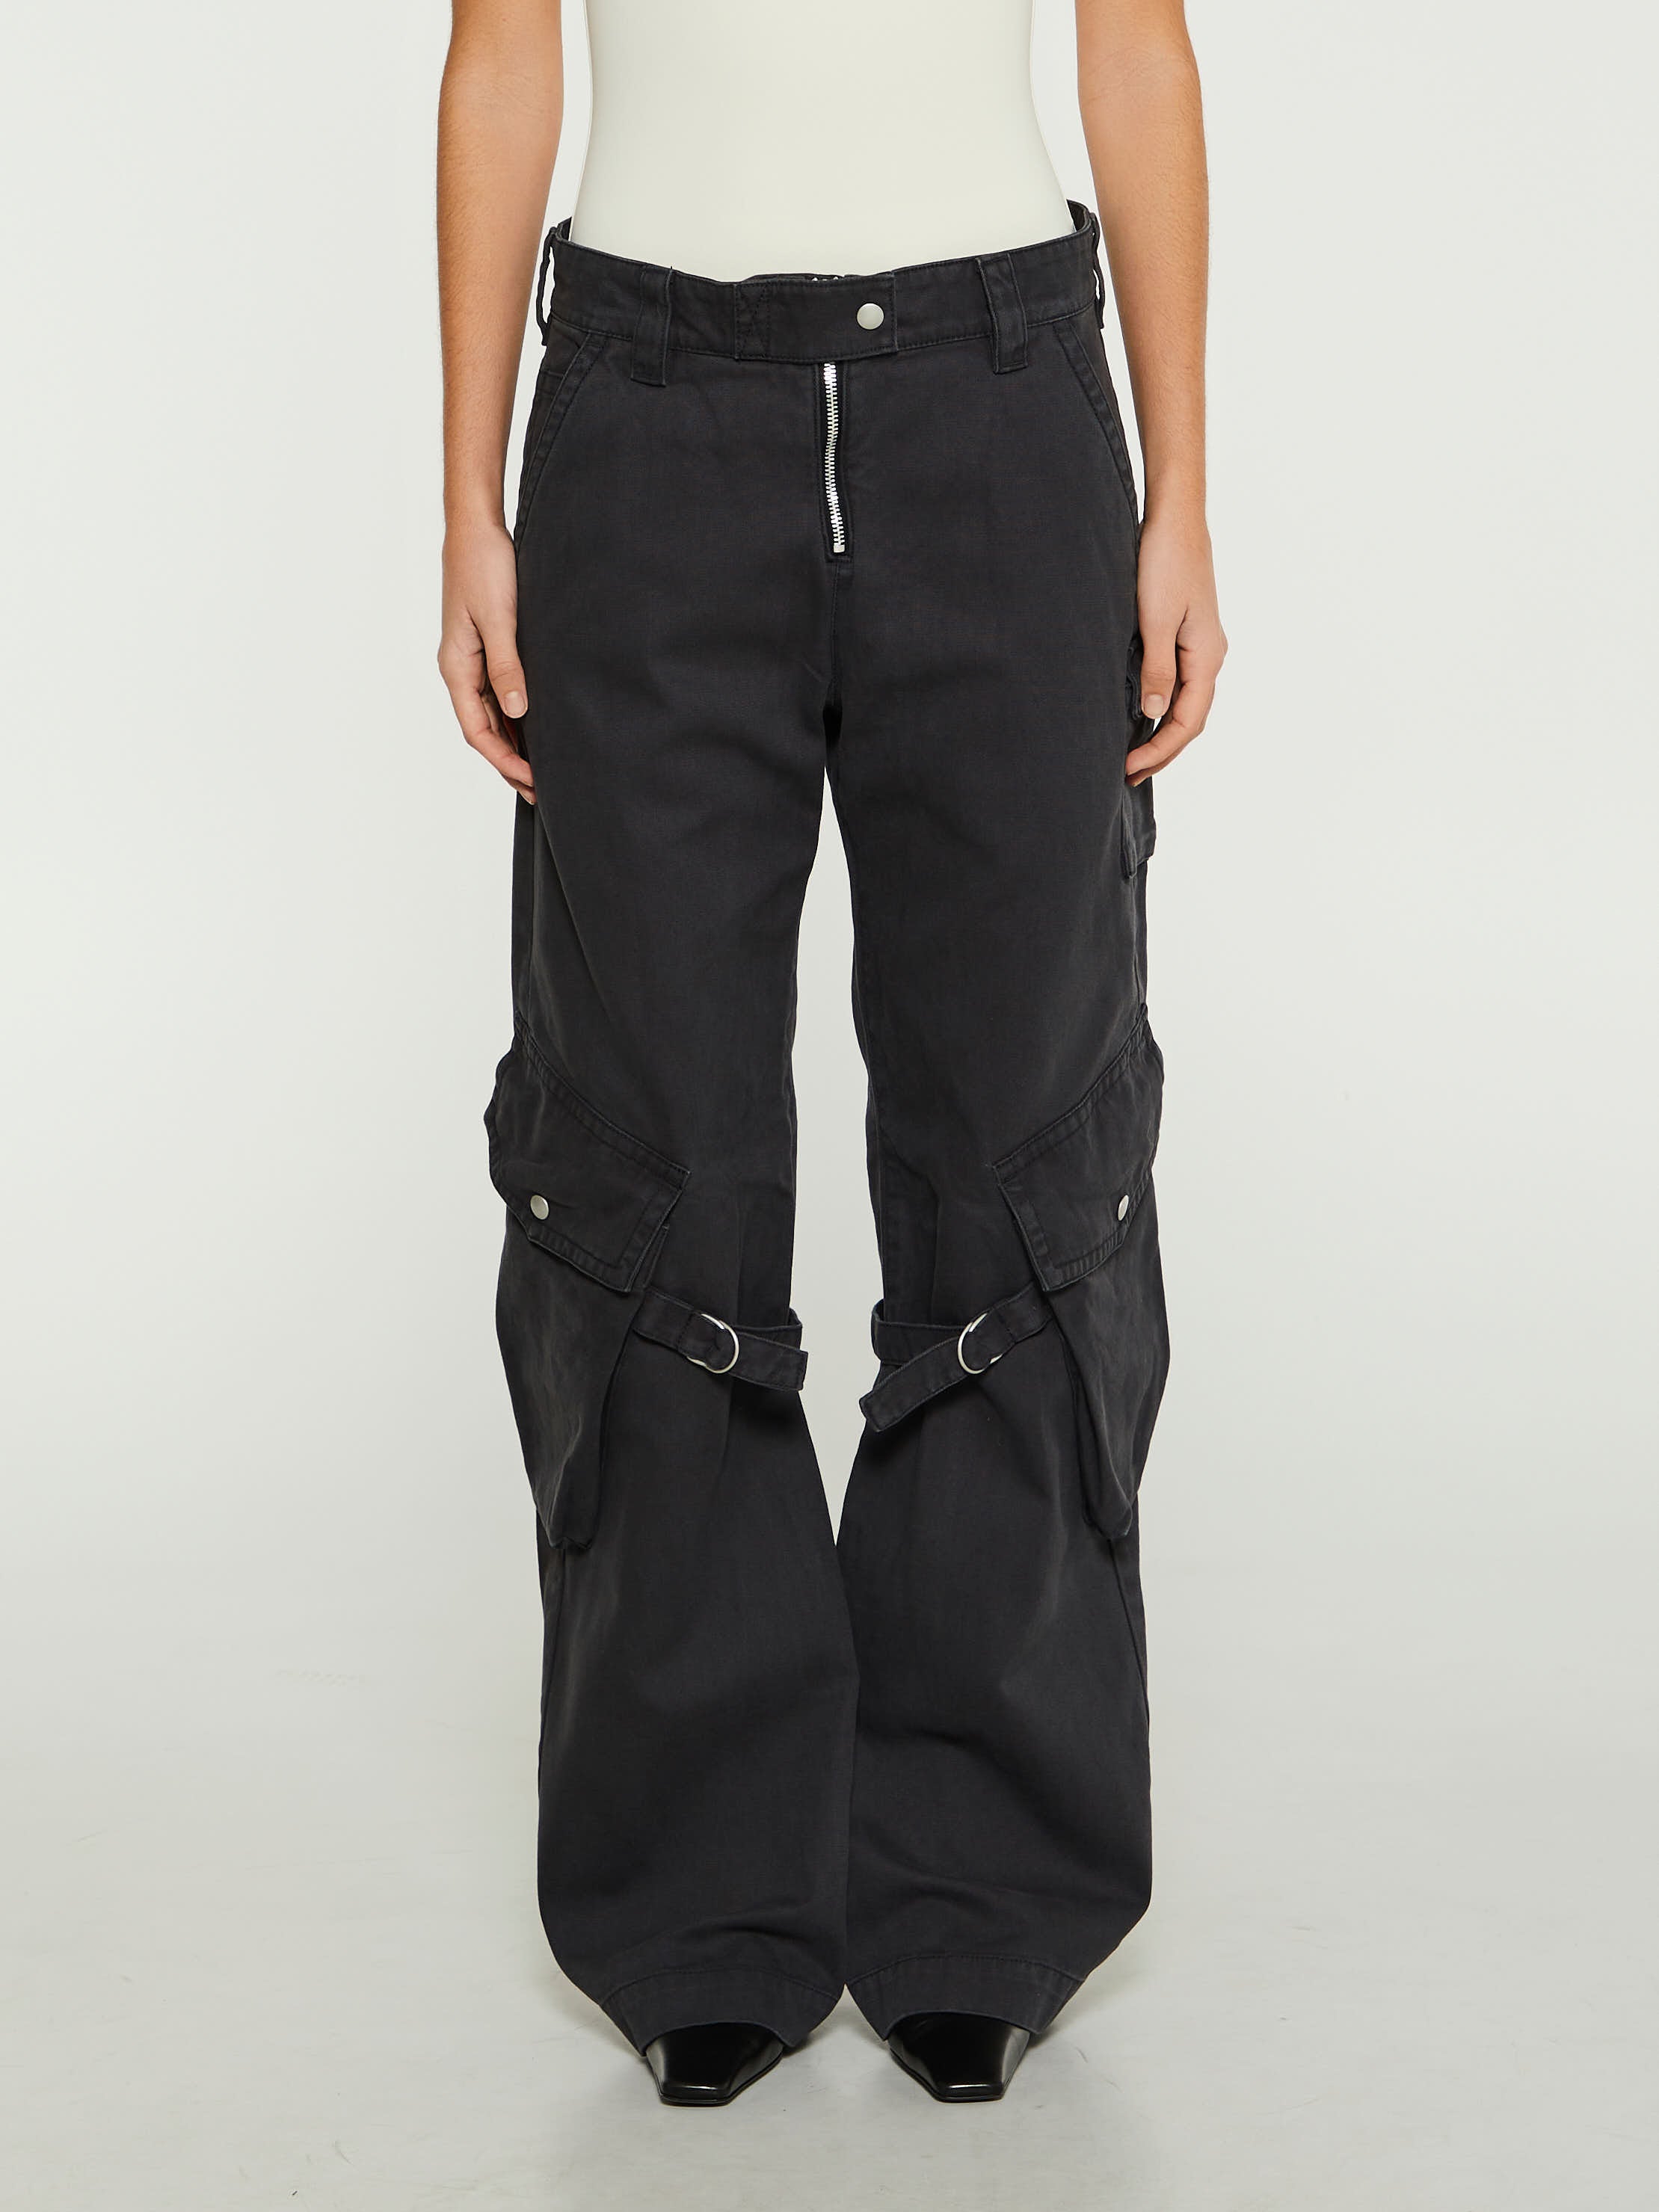 LEEy-World Cargo Pants SweatyRocks Women's Basic Leggings Stretchy Slim  Elastic High Waist Work Pants Khaki,L 